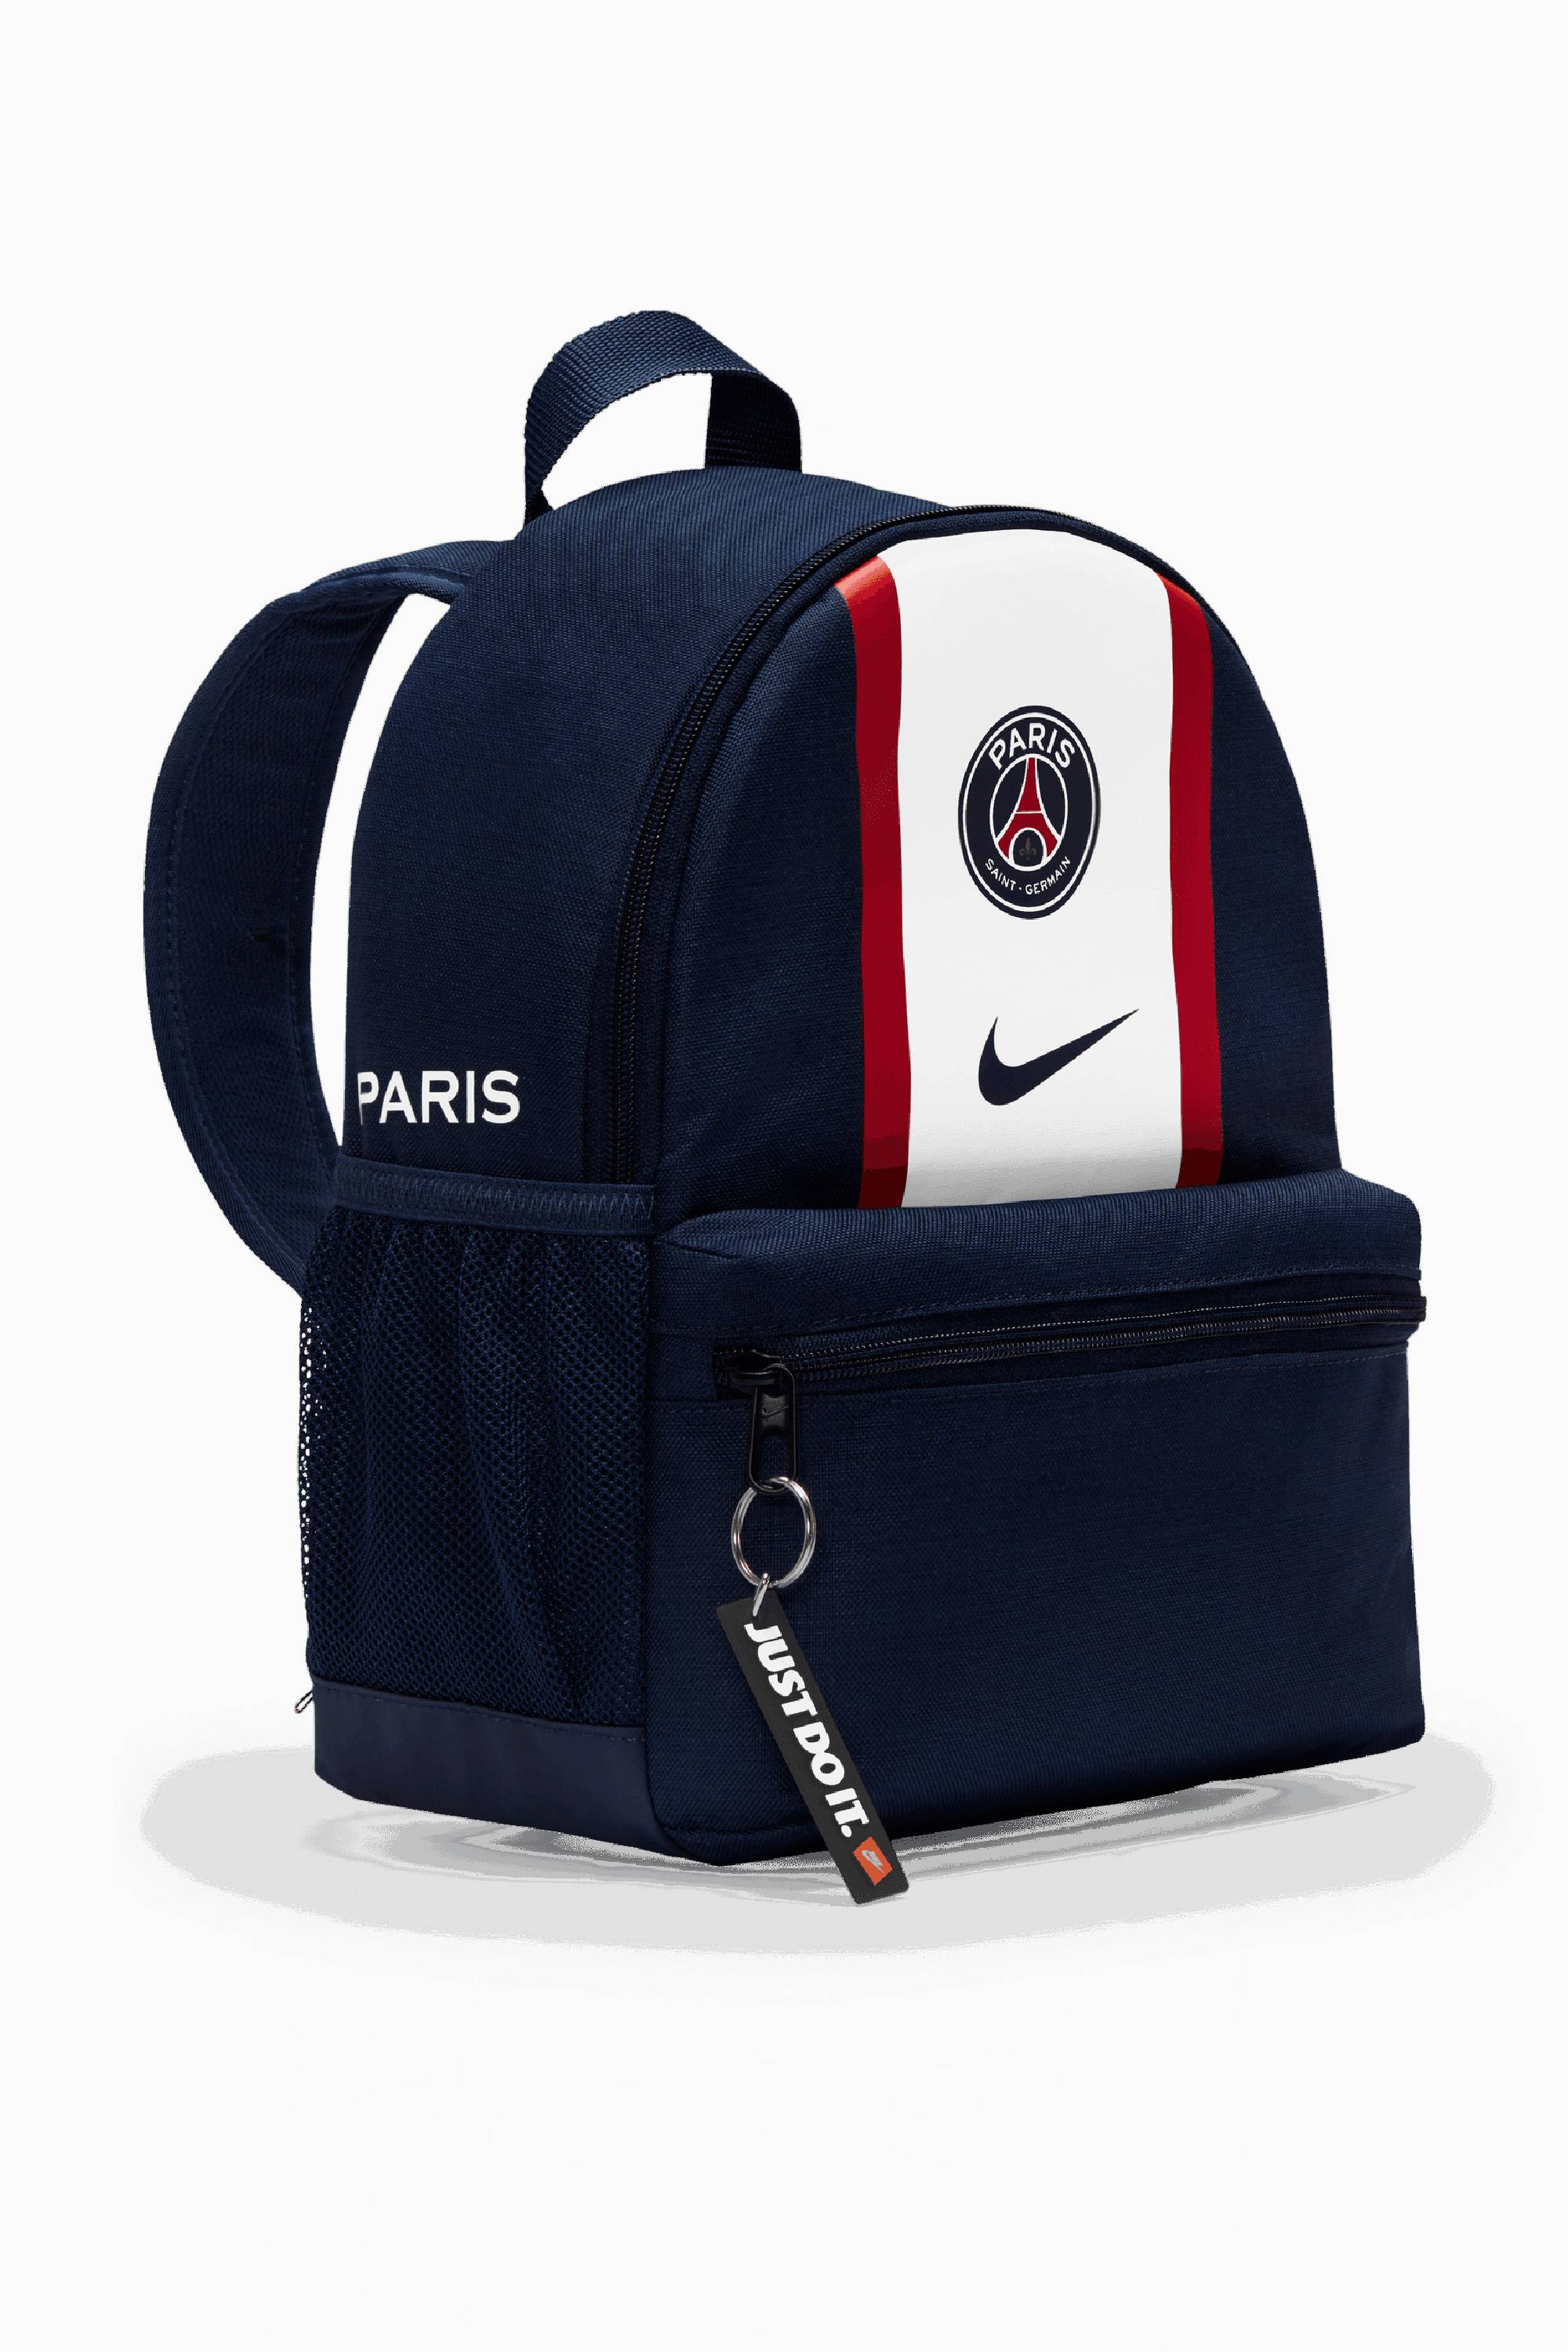 Nike Paris Saint-Germain FC - PSG batoh / ruksak - SKLADOM